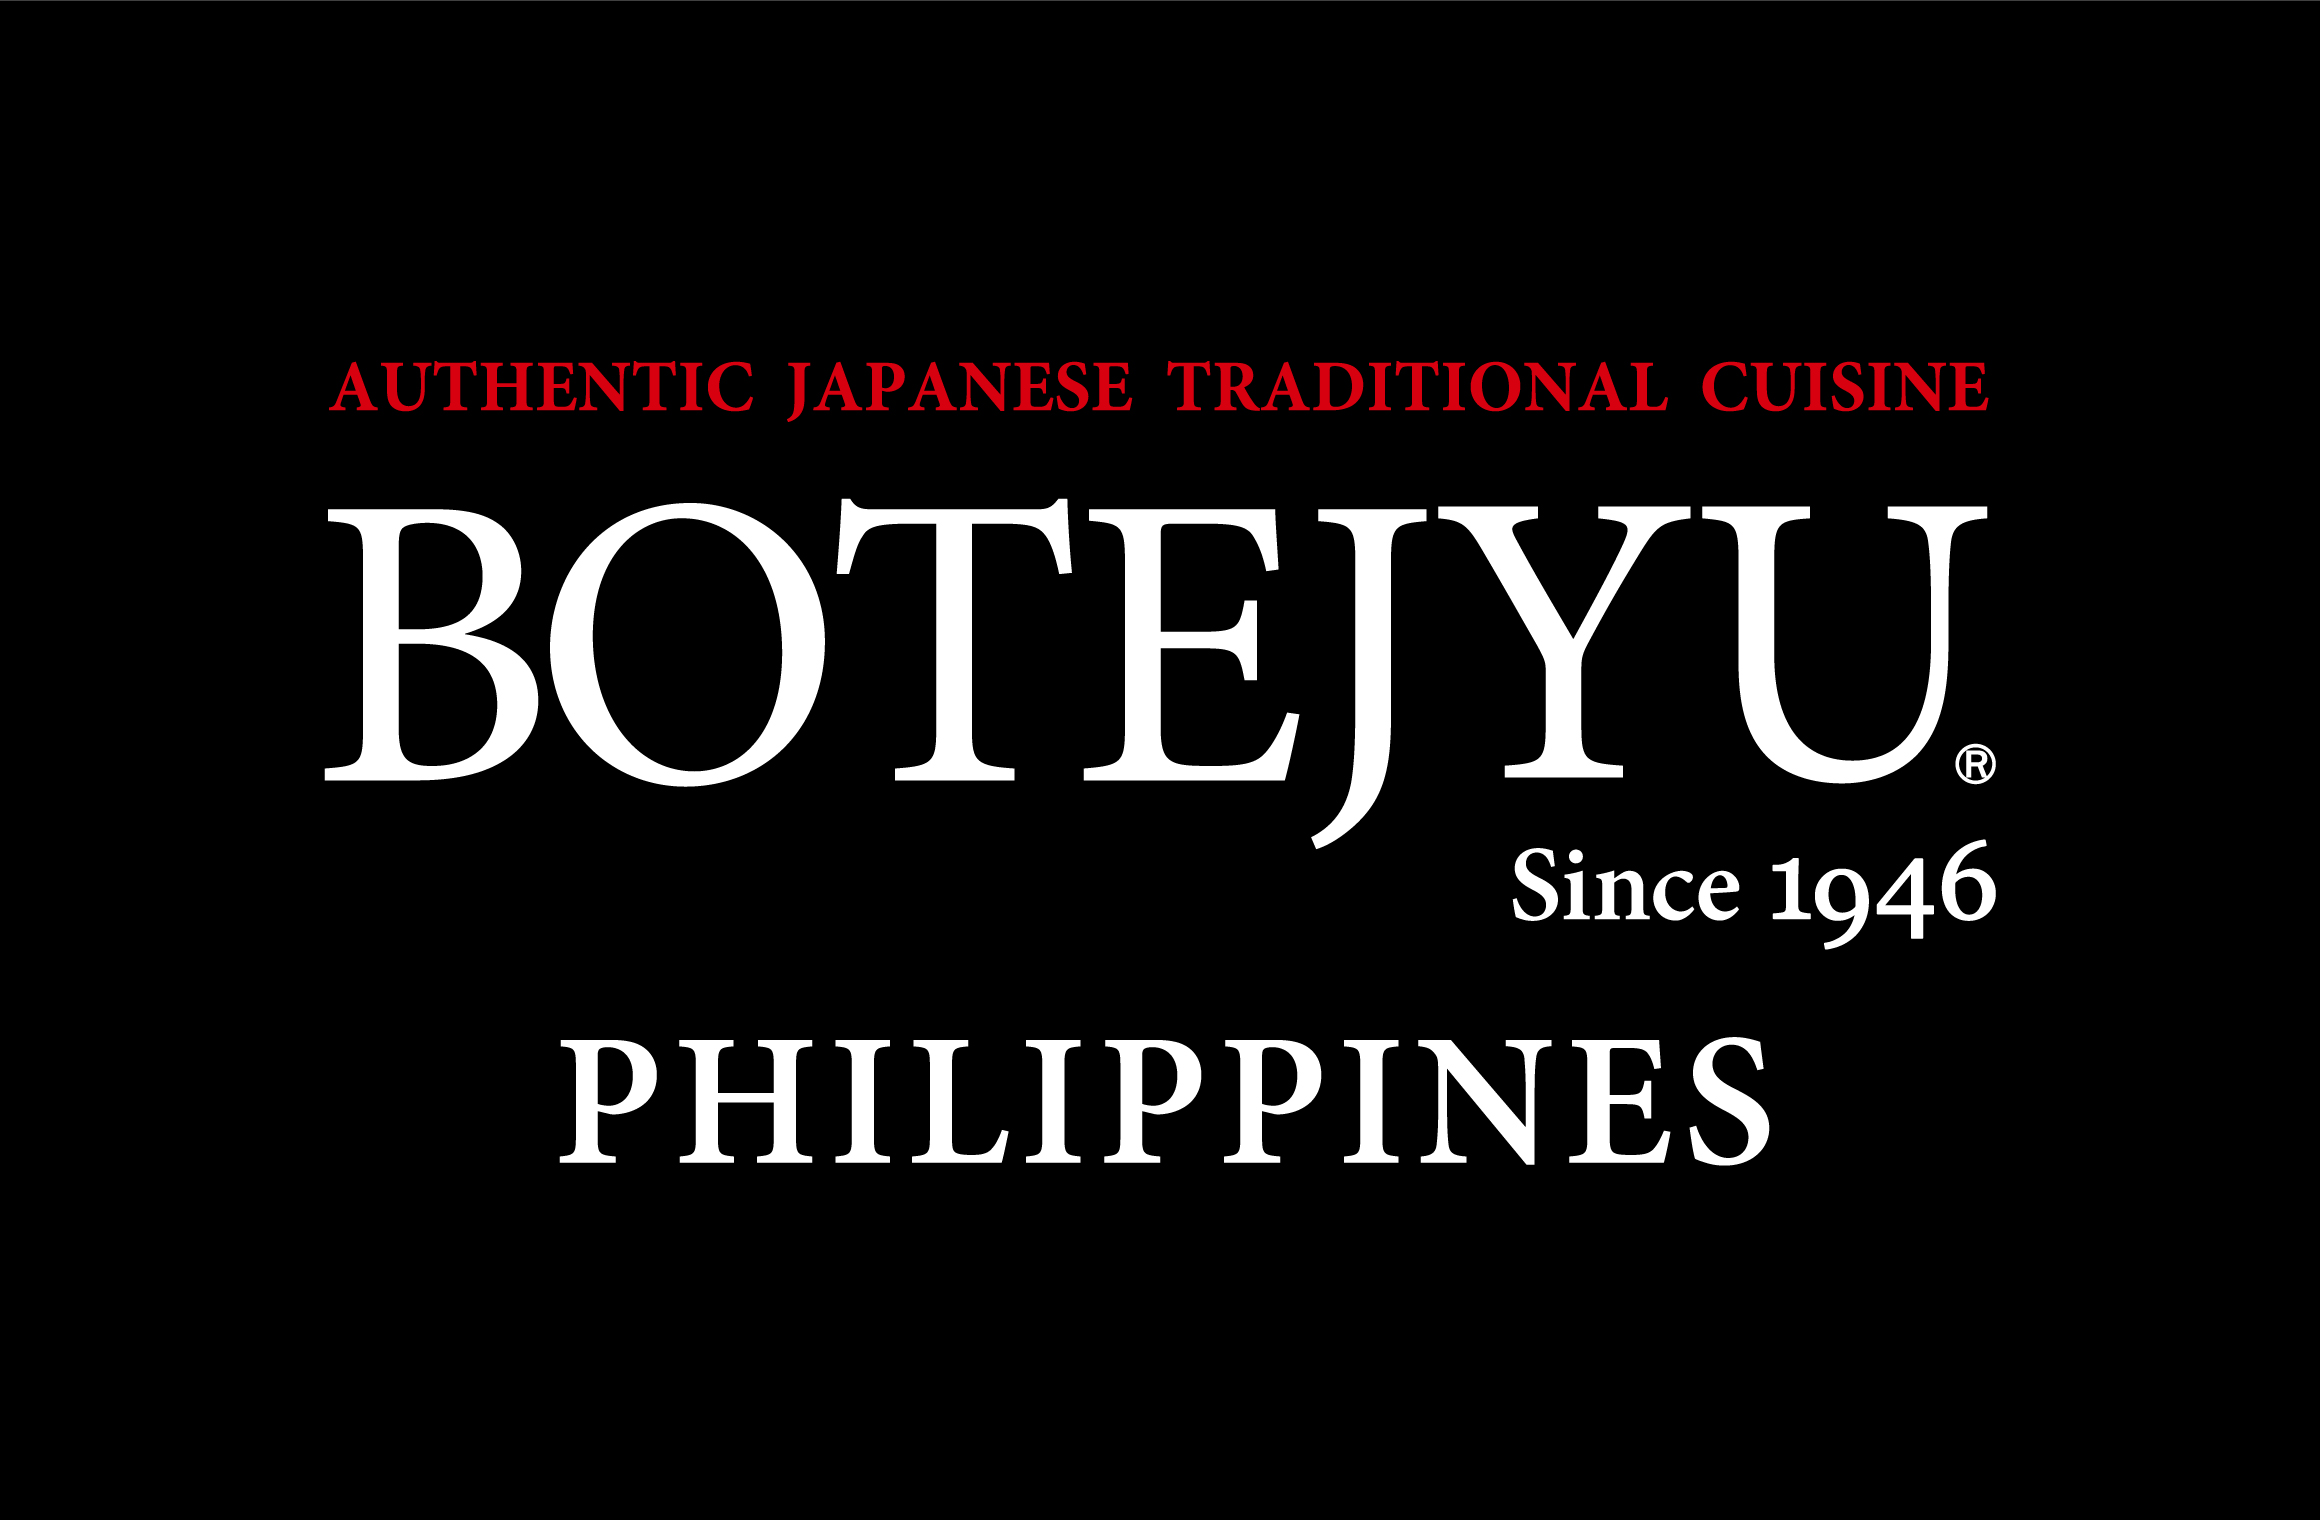 「BOTEJYU® Philippines 55 / SM City Daet」: オープン致します。